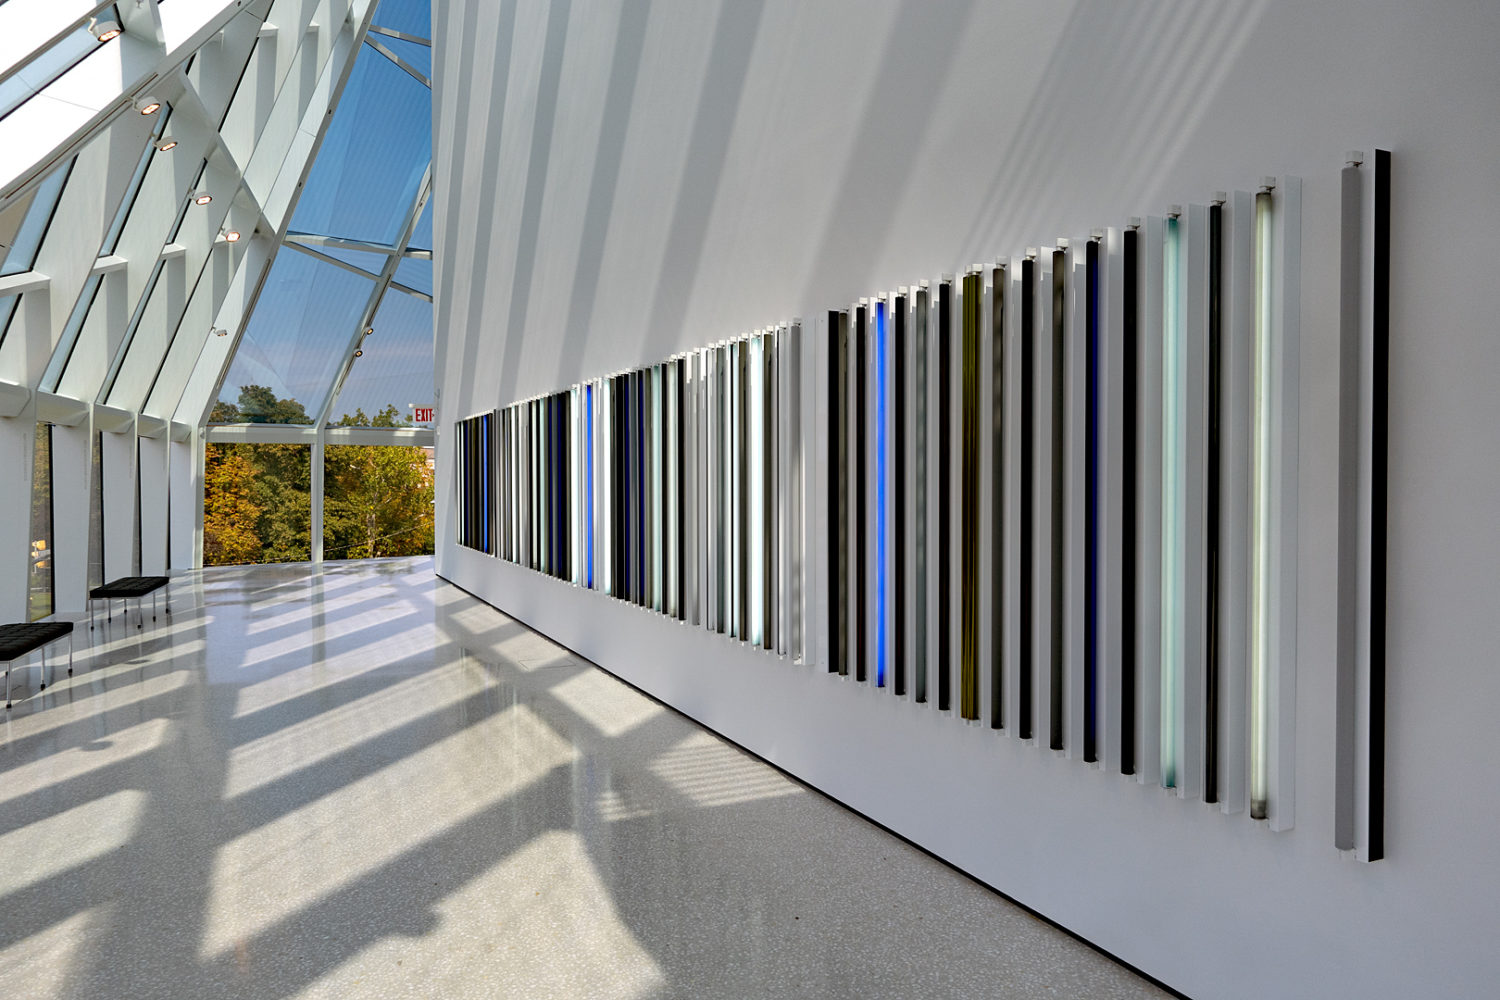 Robert Irwin installation "Niagara 2012" created for Albright Knox in Buffalo, New York